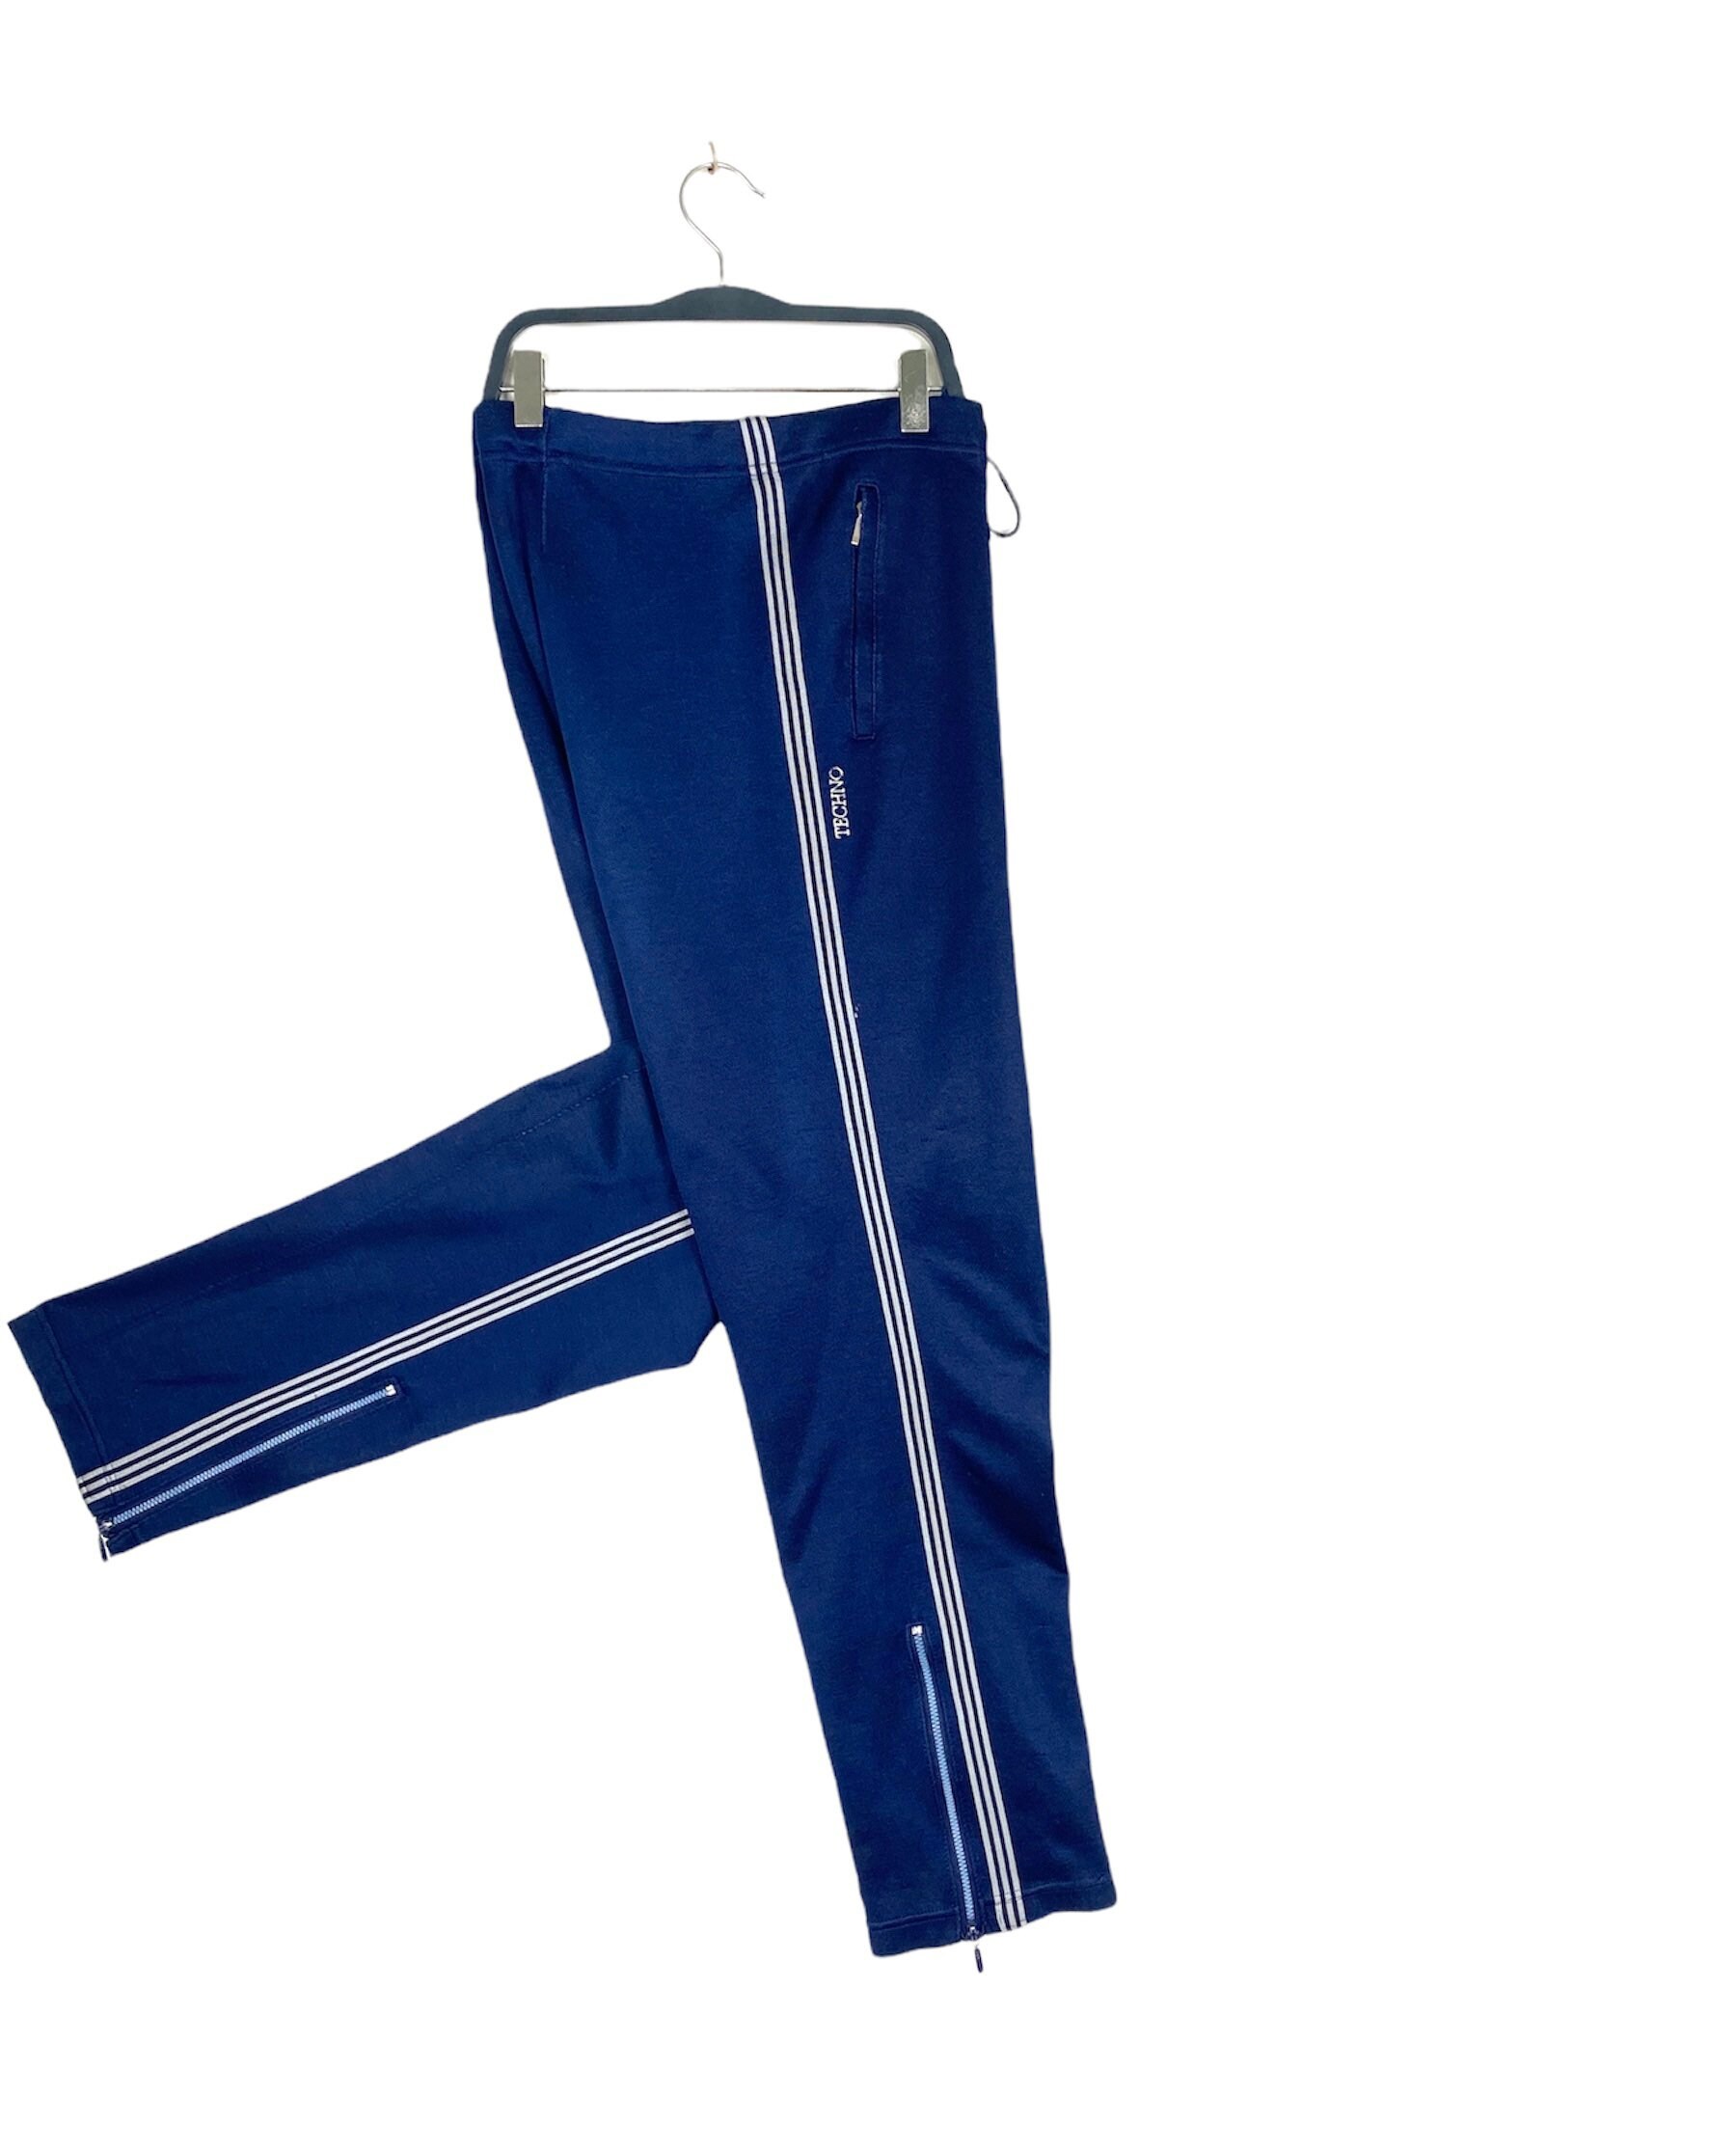 Buy Technosport Technosport Anti-Microbial Slim-Fit Track Pants at Redfynd